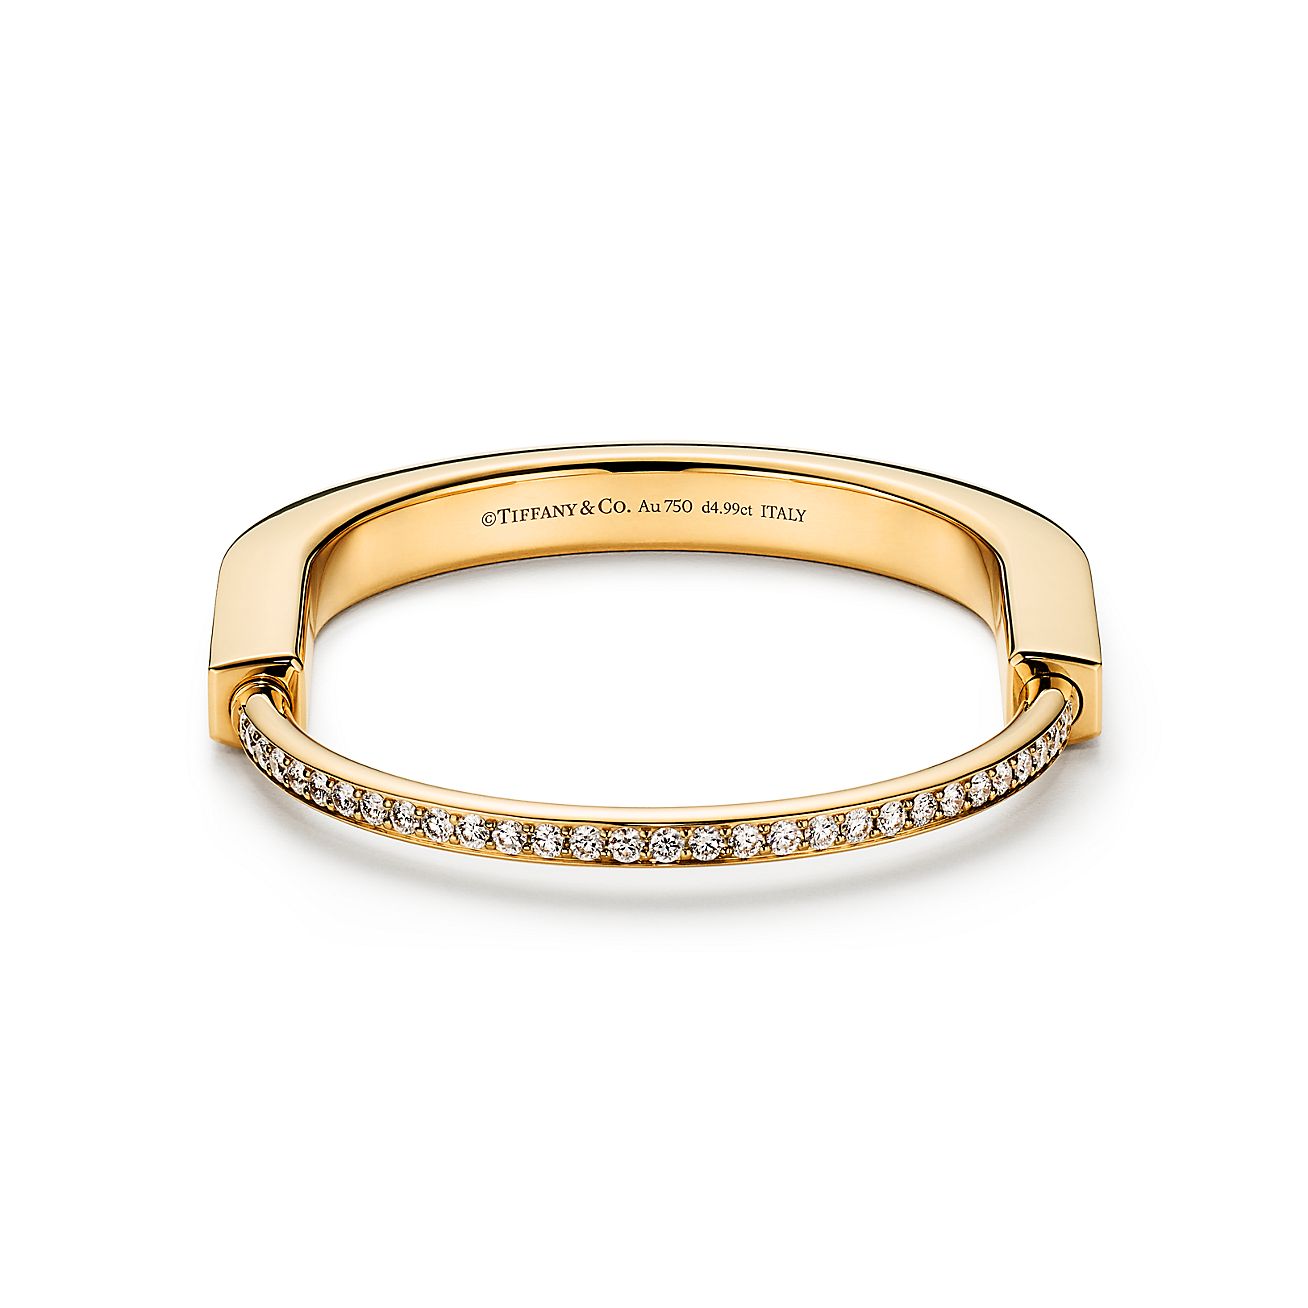 Tiffany & Co Silver Padlock Key Locks Bracelet Bangle Charm Pendant Gift  Pouch